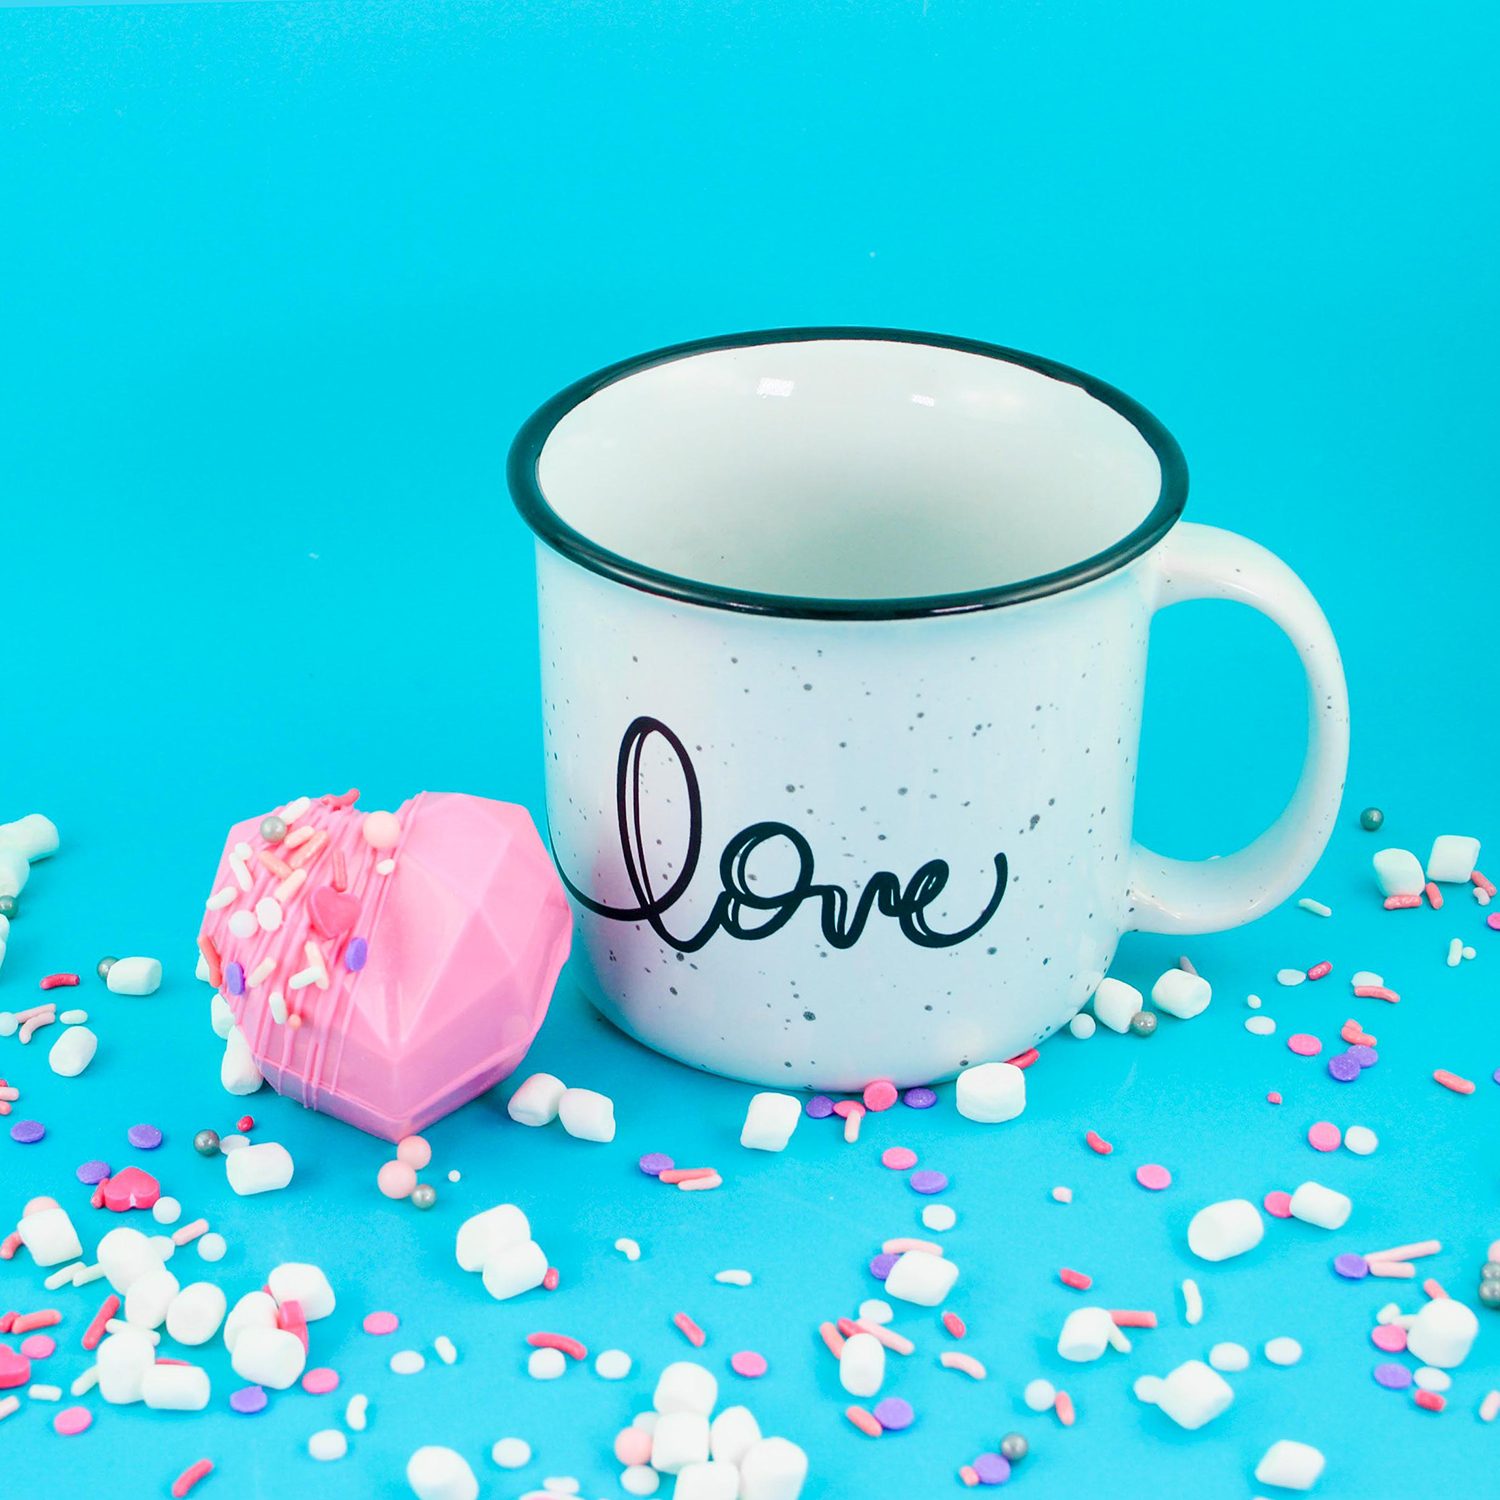 pink heart shaped hot cocoa bomb and mug